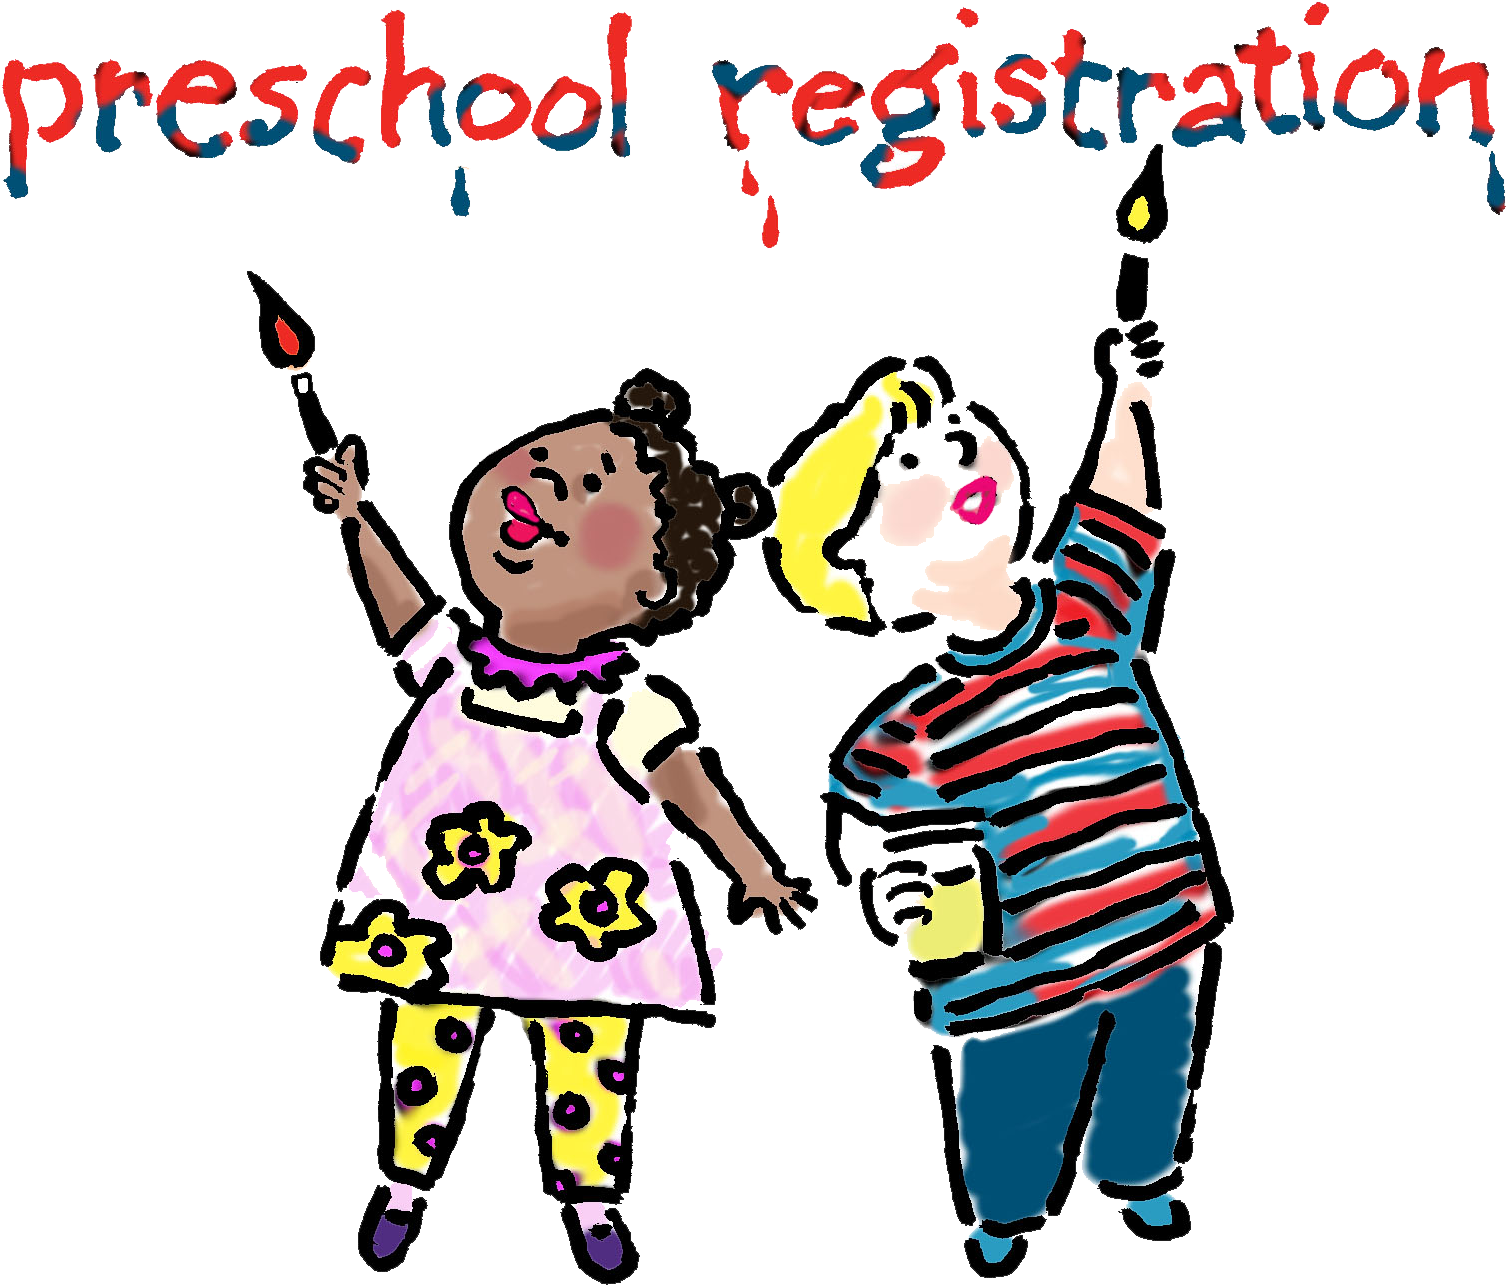 Preschool-register01c - Preschool Registration (1526x1296)